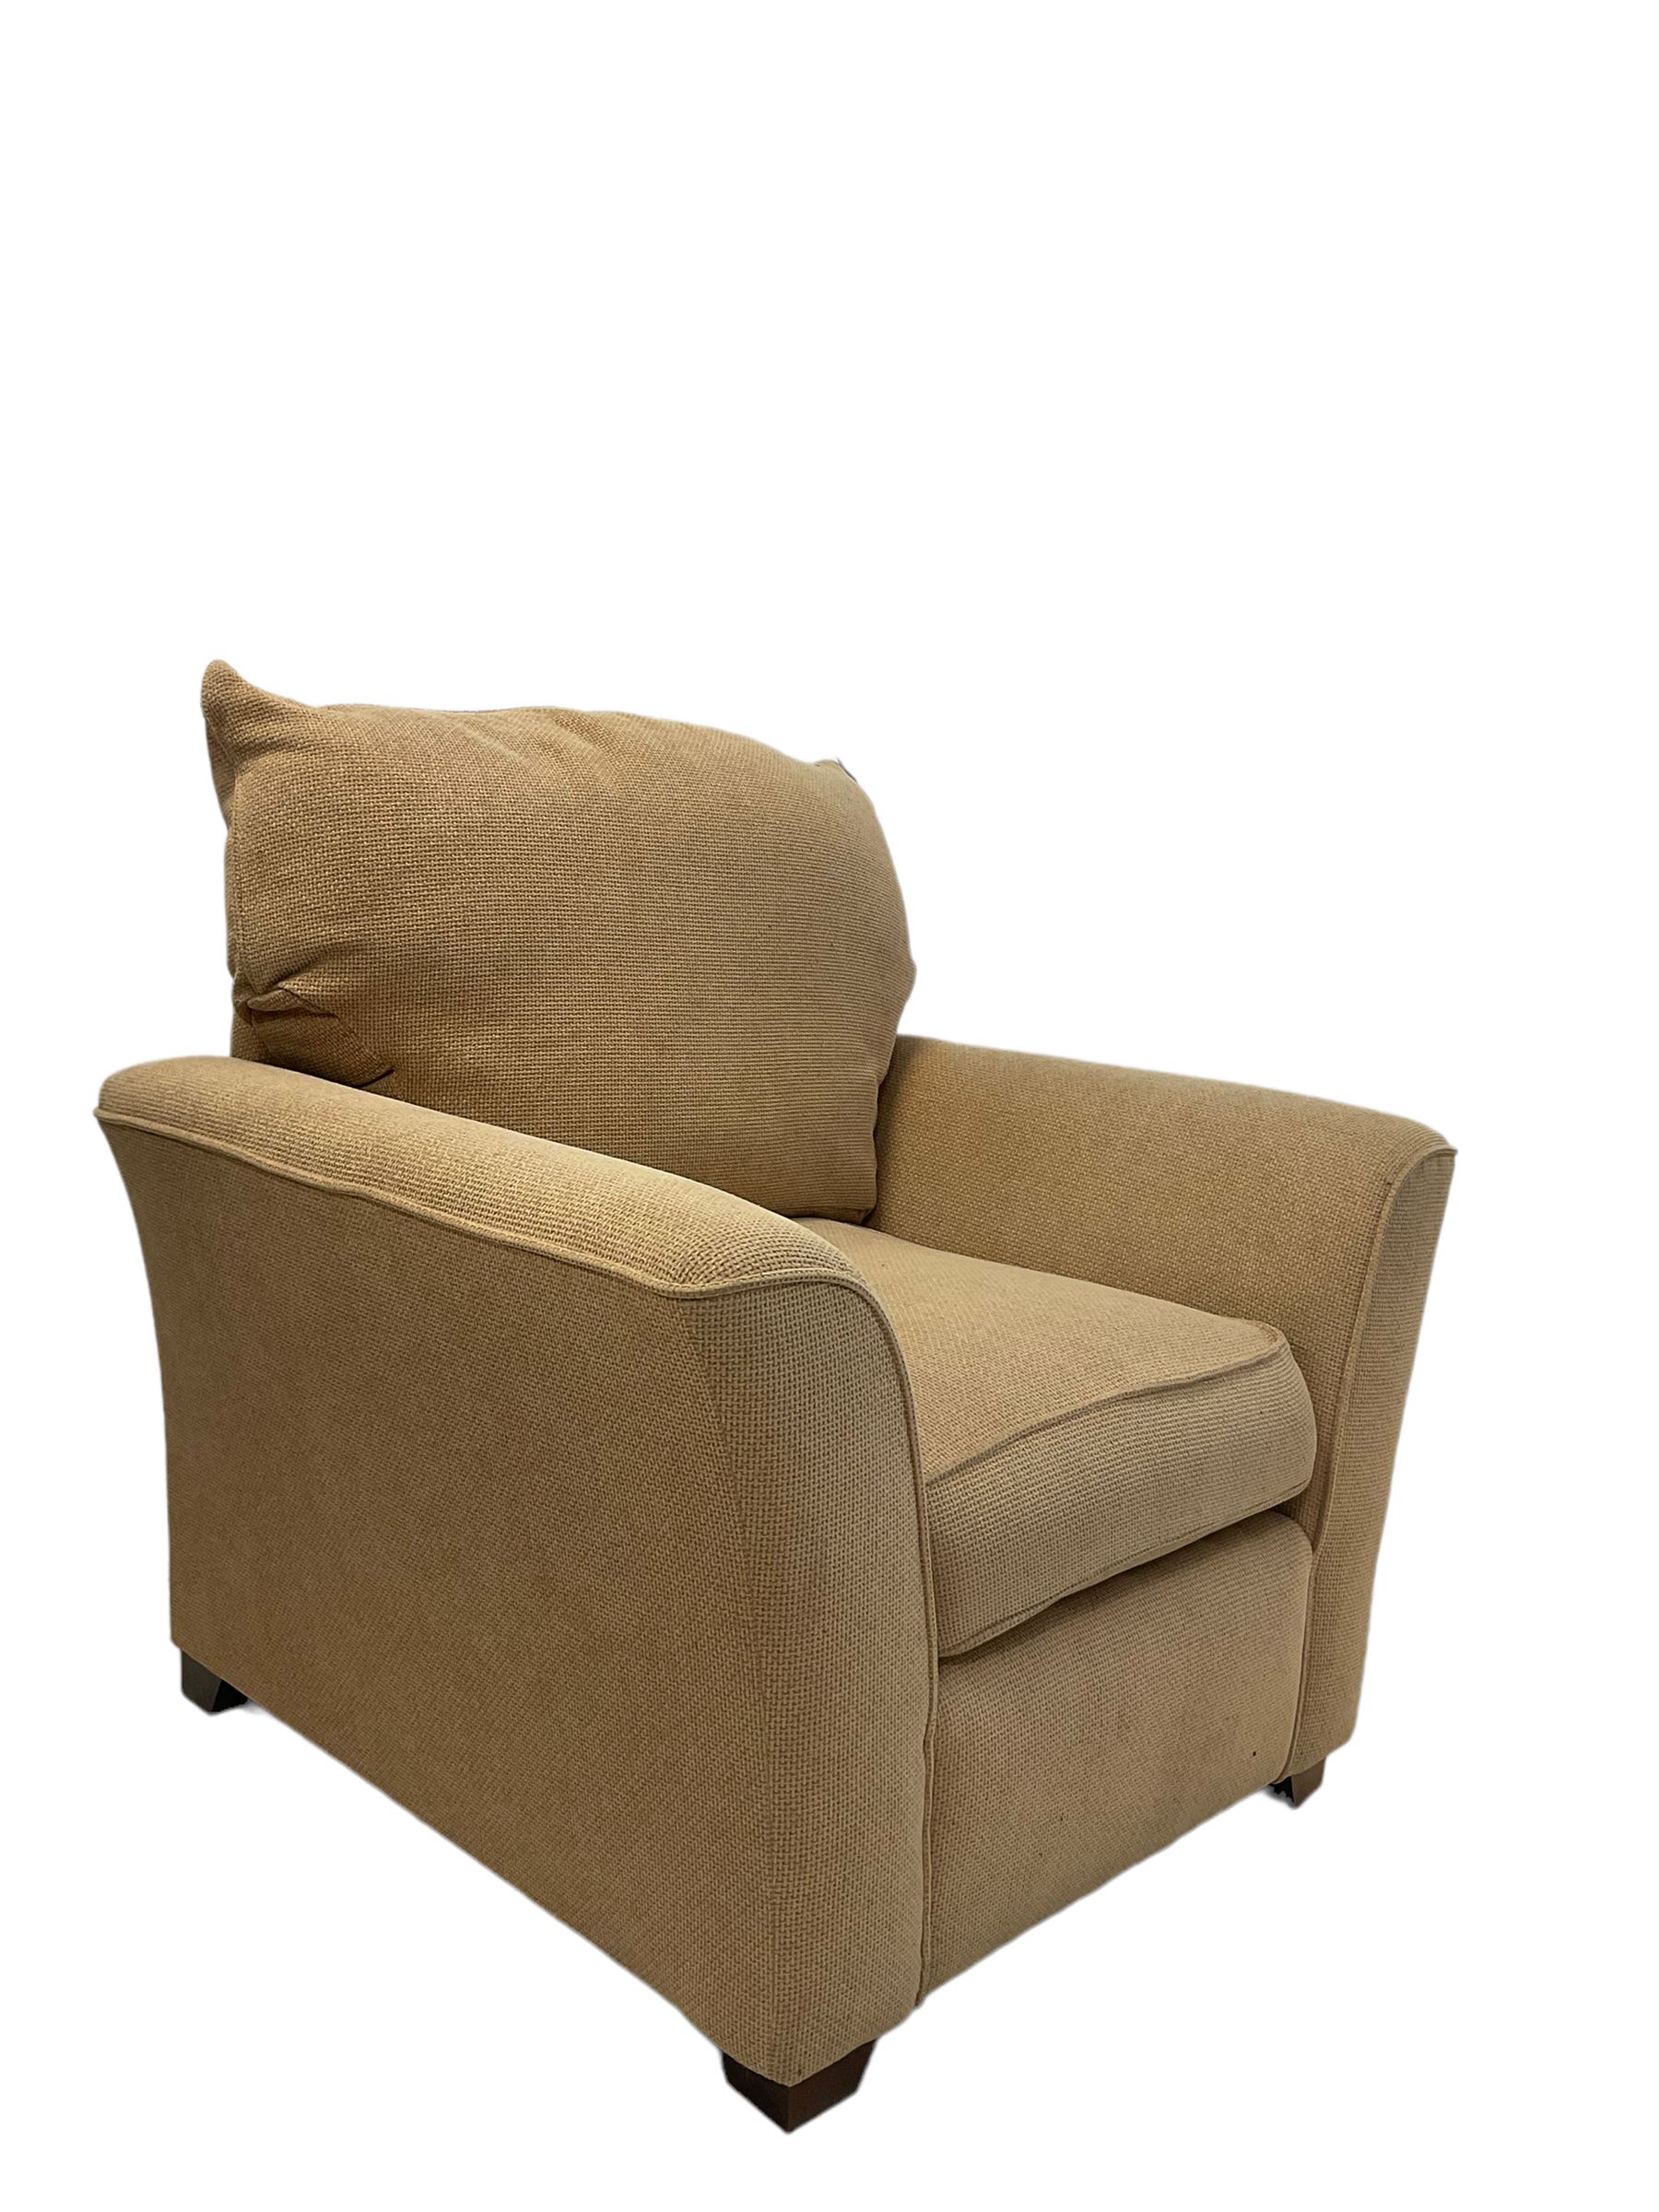 Armchair upholstered in beige fabric - Bild 3 aus 3